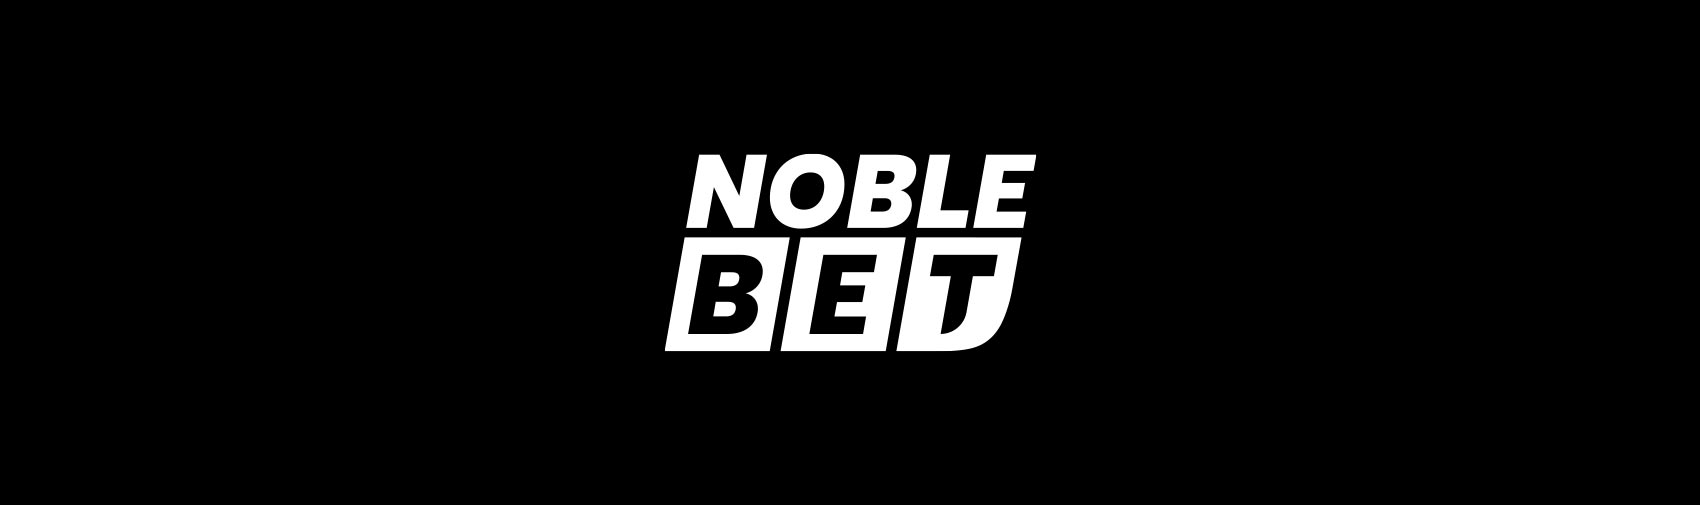 Noblebet co oferuje – przegląd oferty